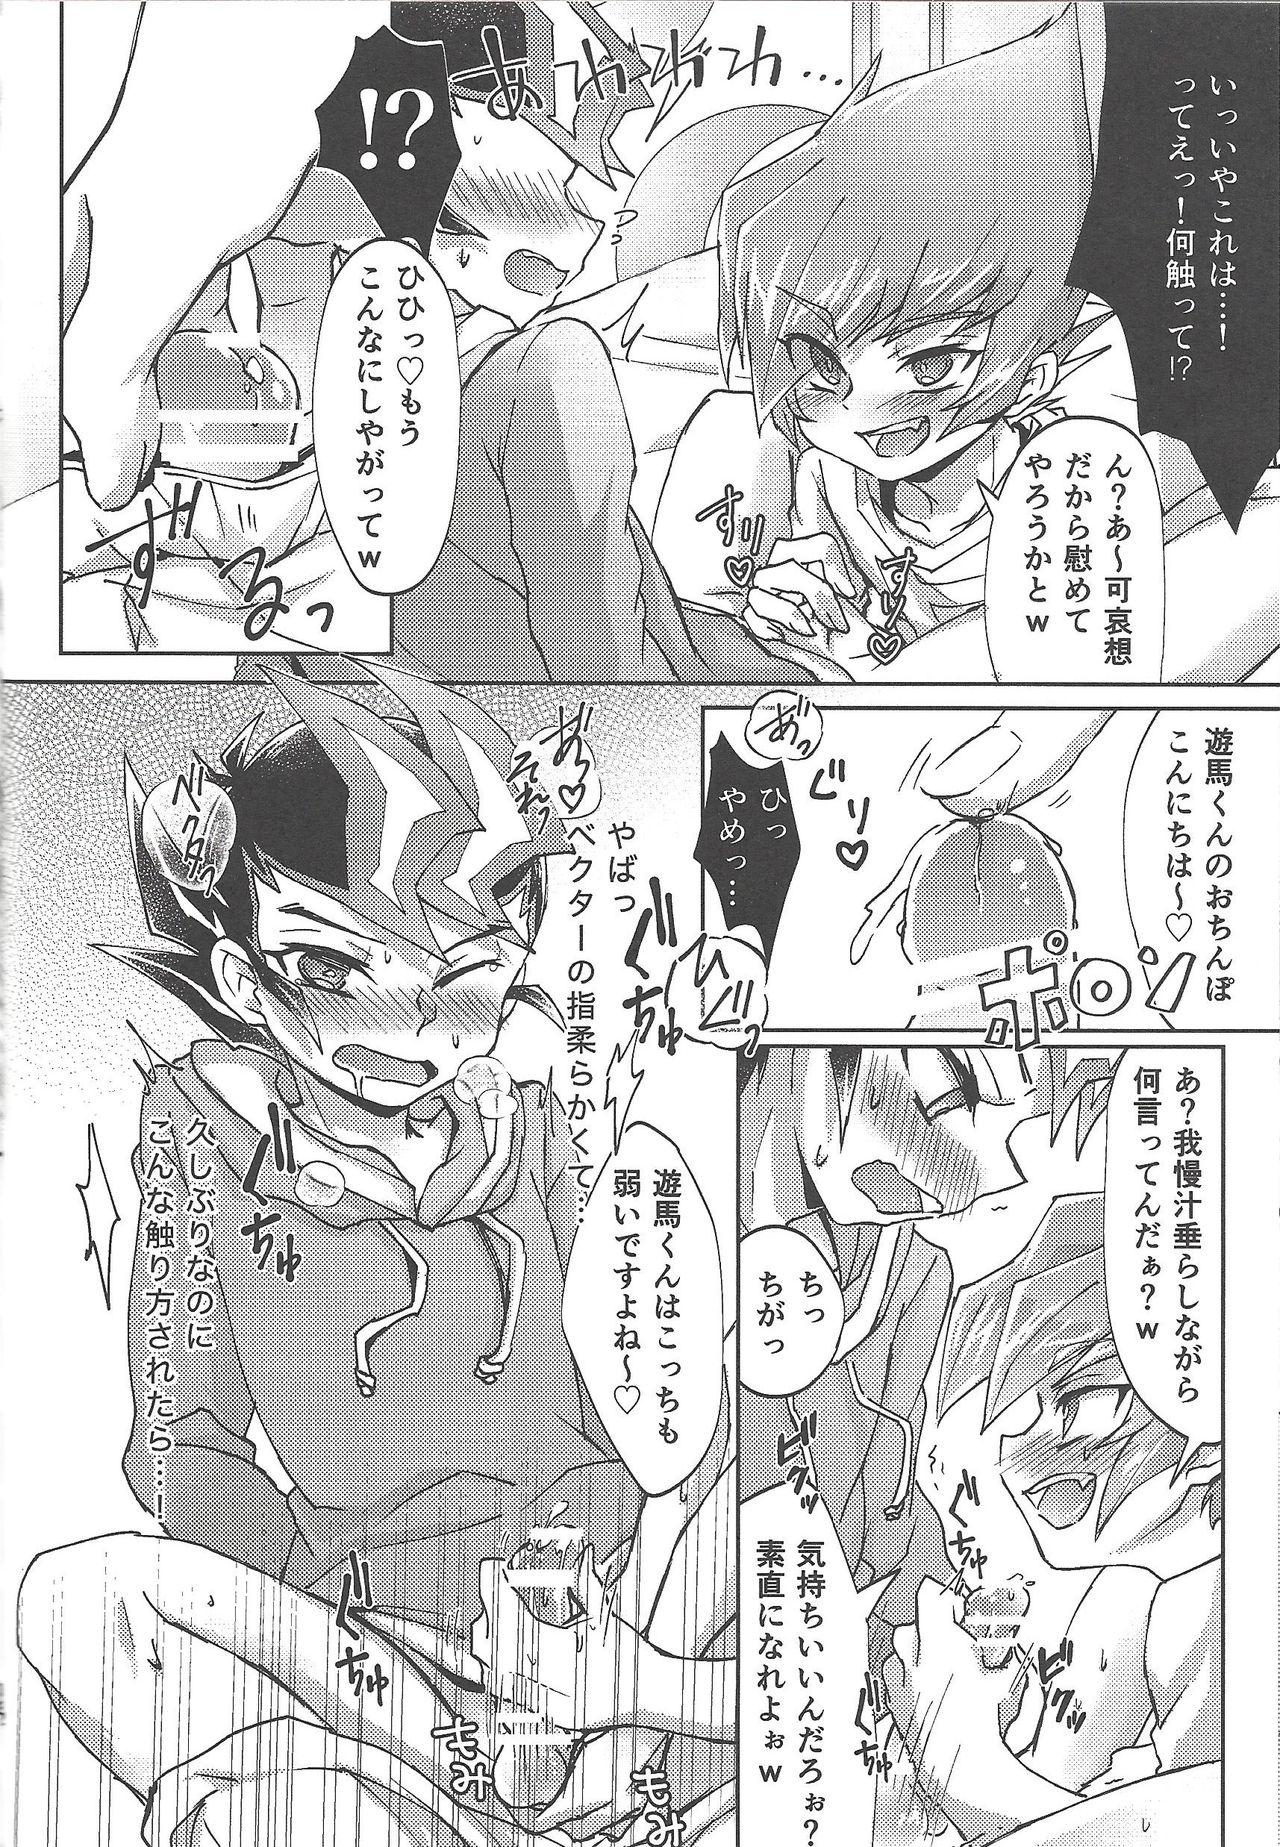 Bareback Soshite mata, asa ga kurukara - Yu-gi-oh zexal Solo Female - Page 11